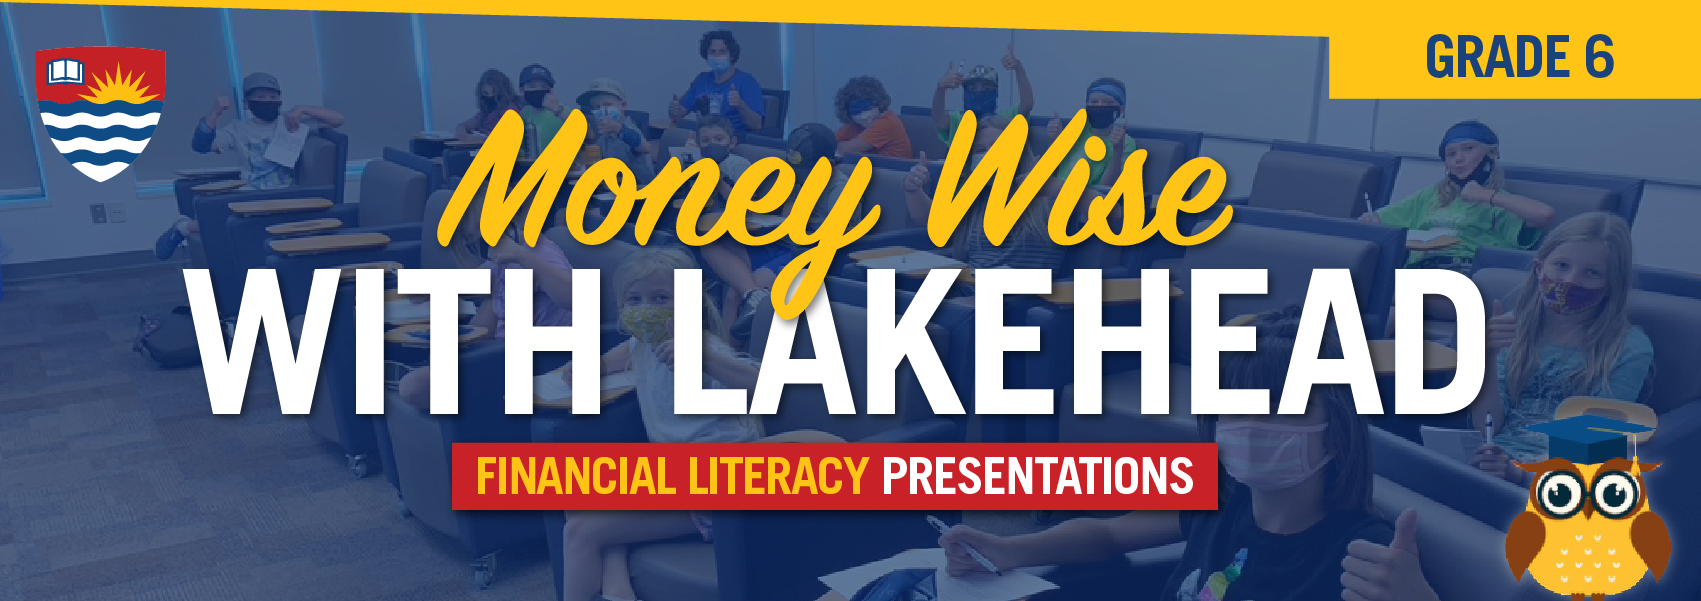 Money wise with lakehead grade 6